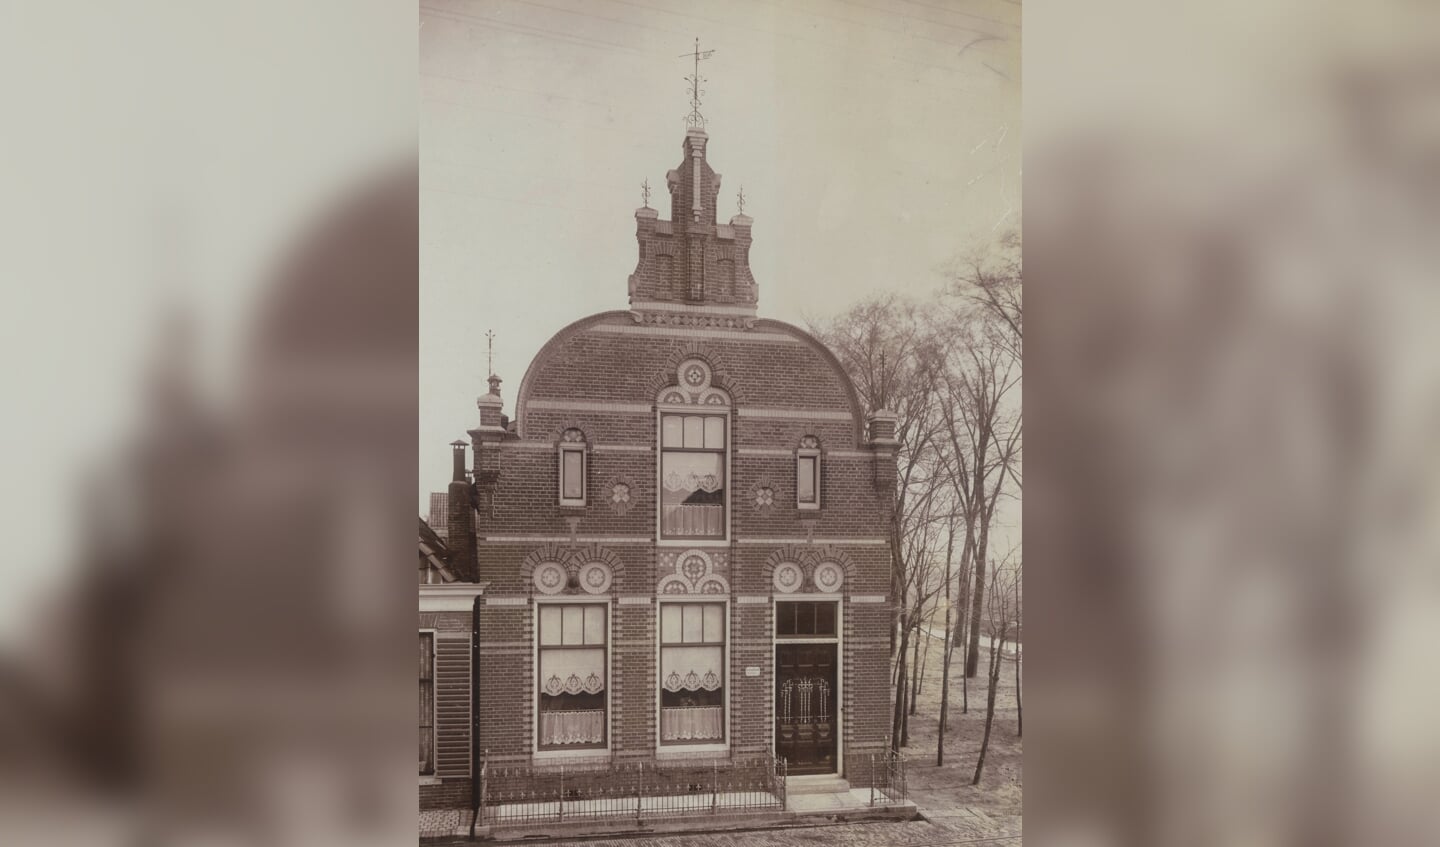 Het woonhuis van de grootvader van Friso Woudstra, architect Kroon in Bolsward. Archieffoto